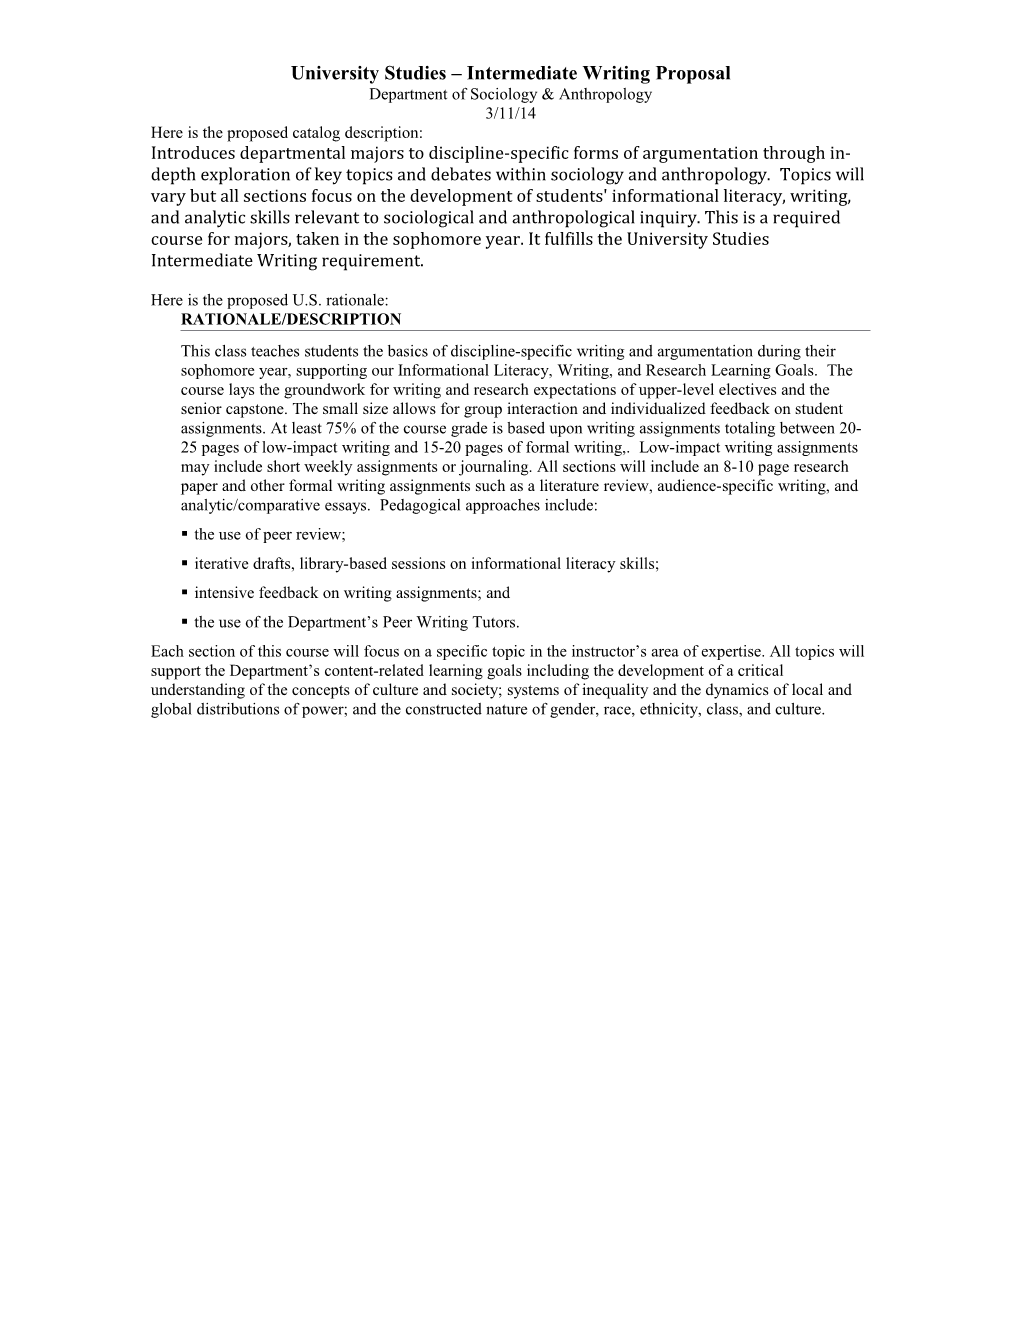 University Studies Intermediate Writing Proposal, Sociology/Anthropology Page 1